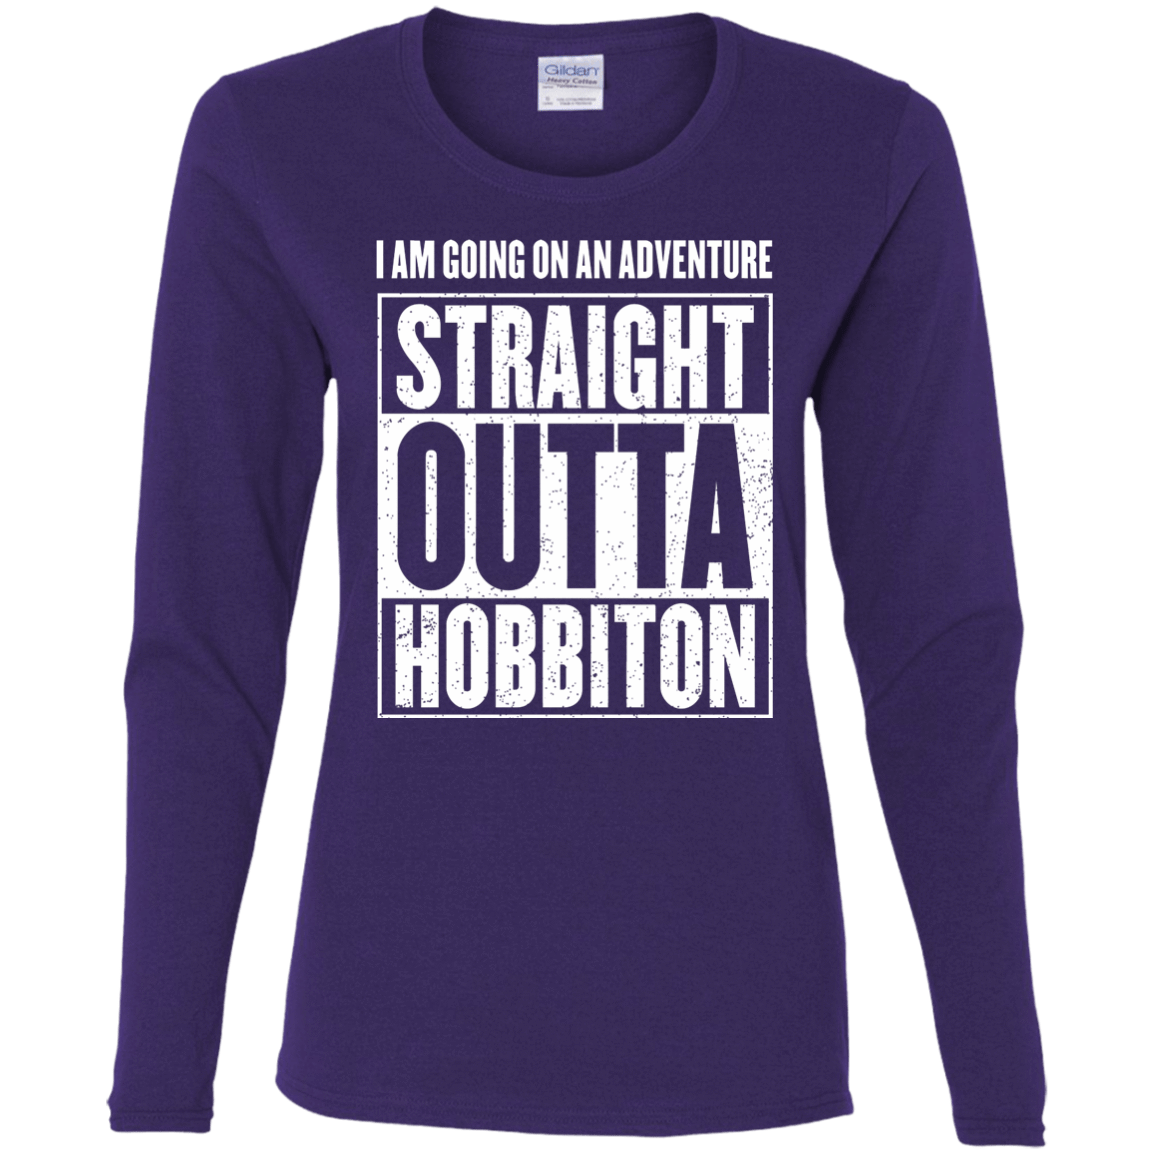 T-Shirts Purple / S Straight Outta Hobbiton Women's Long Sleeve T-Shirt